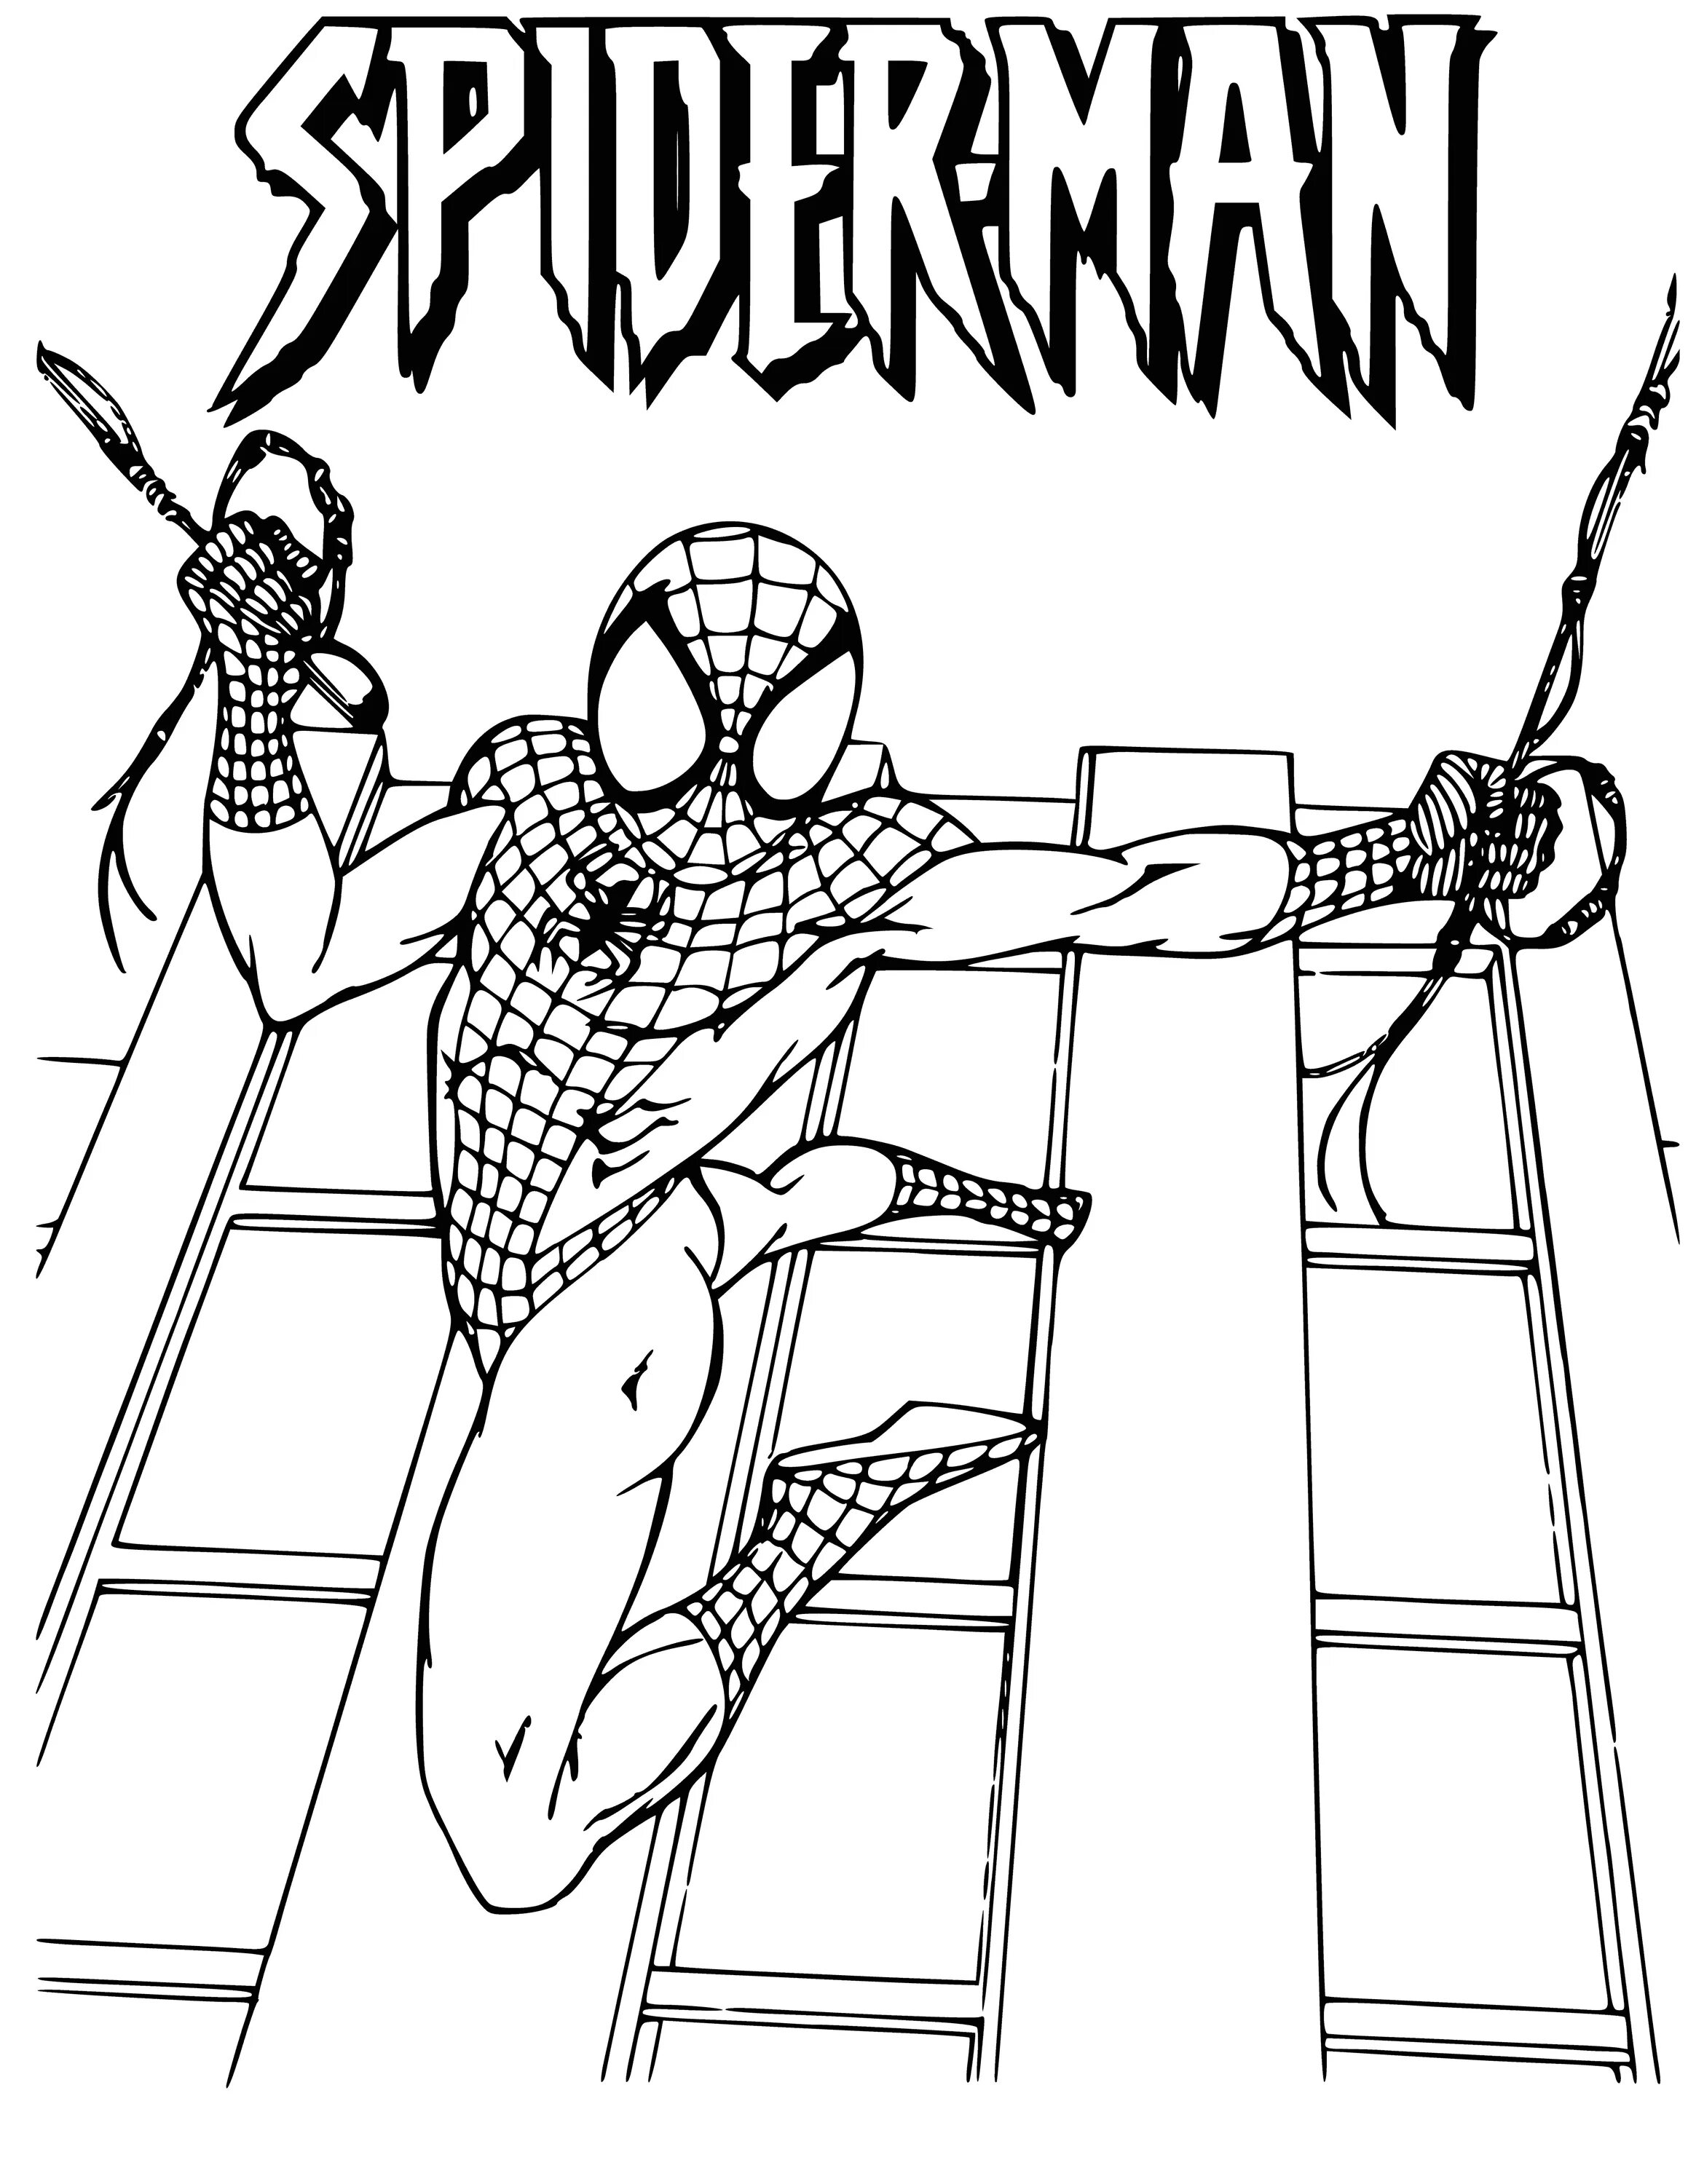 Spiderman comic #2